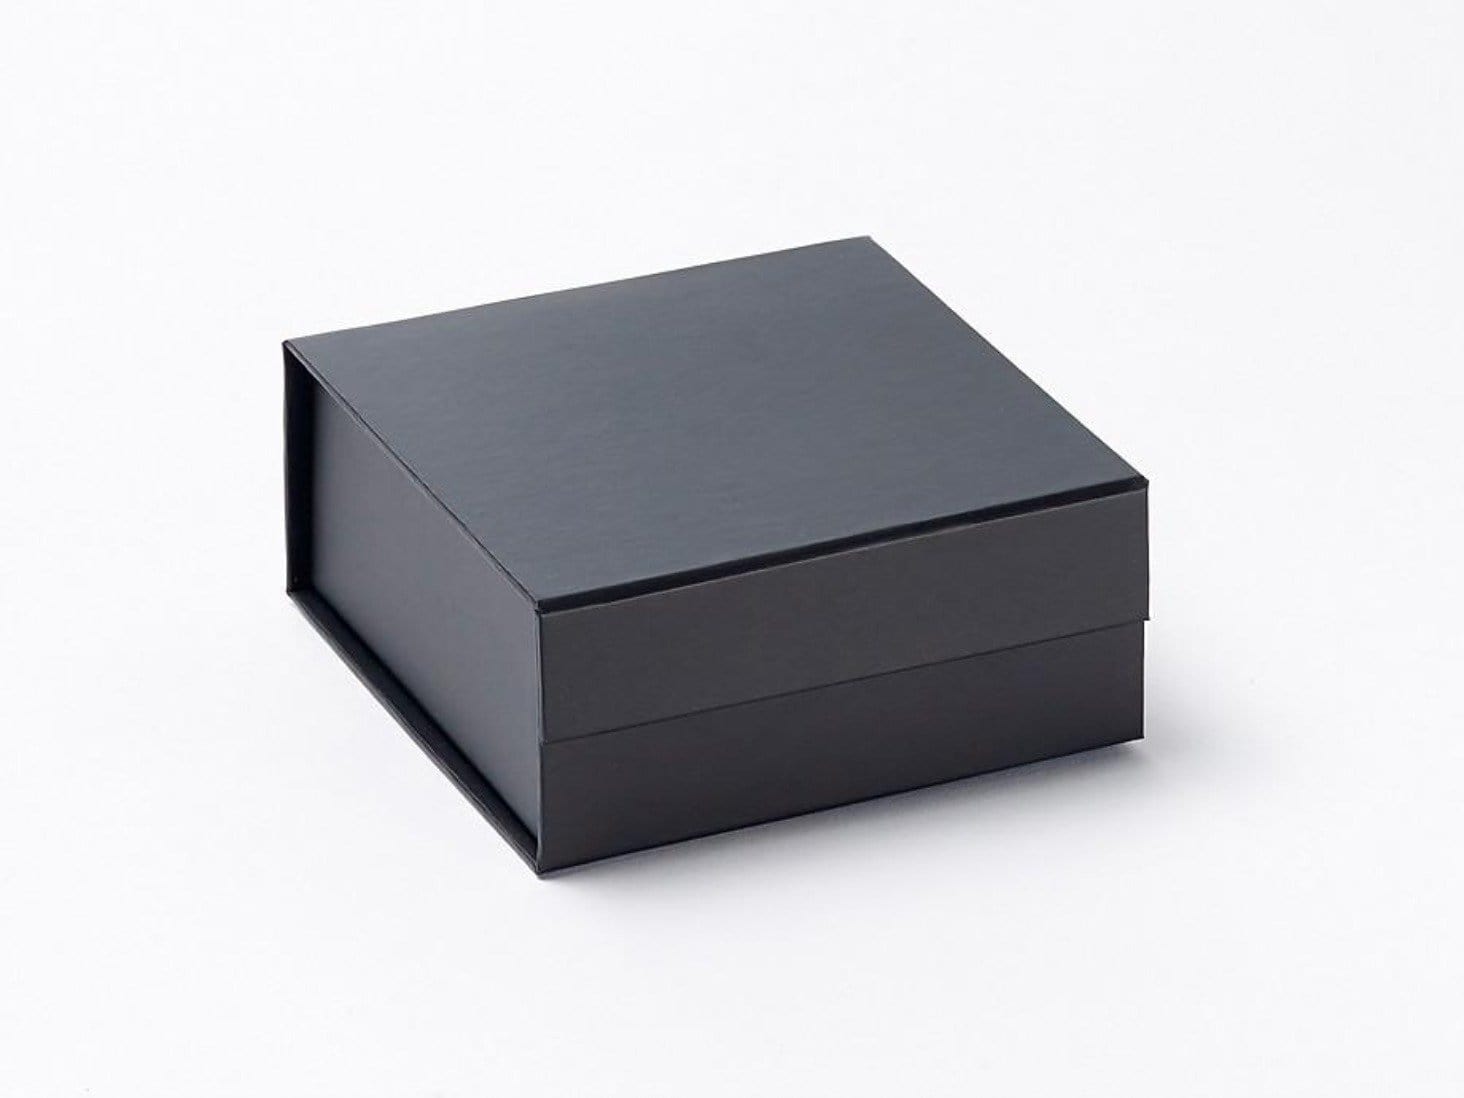 Small Black Gift Box Sample without ribbon from Foldabox UK